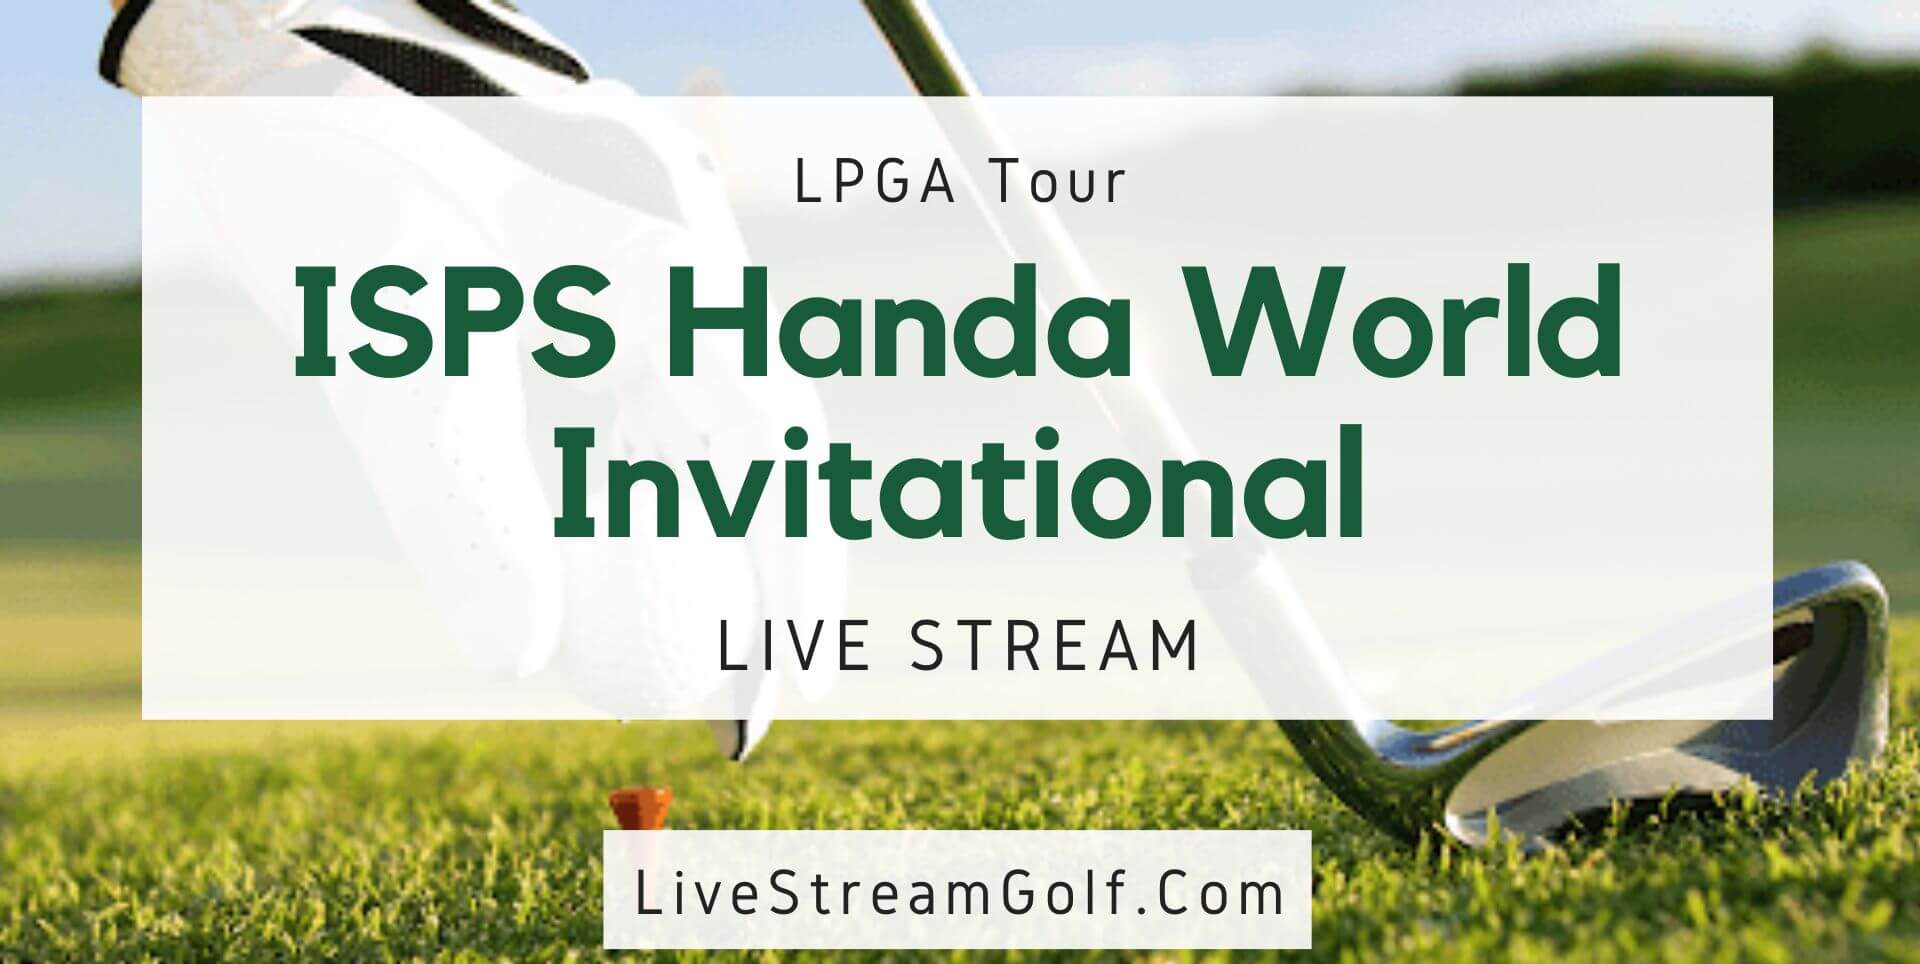 ISPS Handa World Invitational Day 4 Live Stream: LPGA Tour 2022